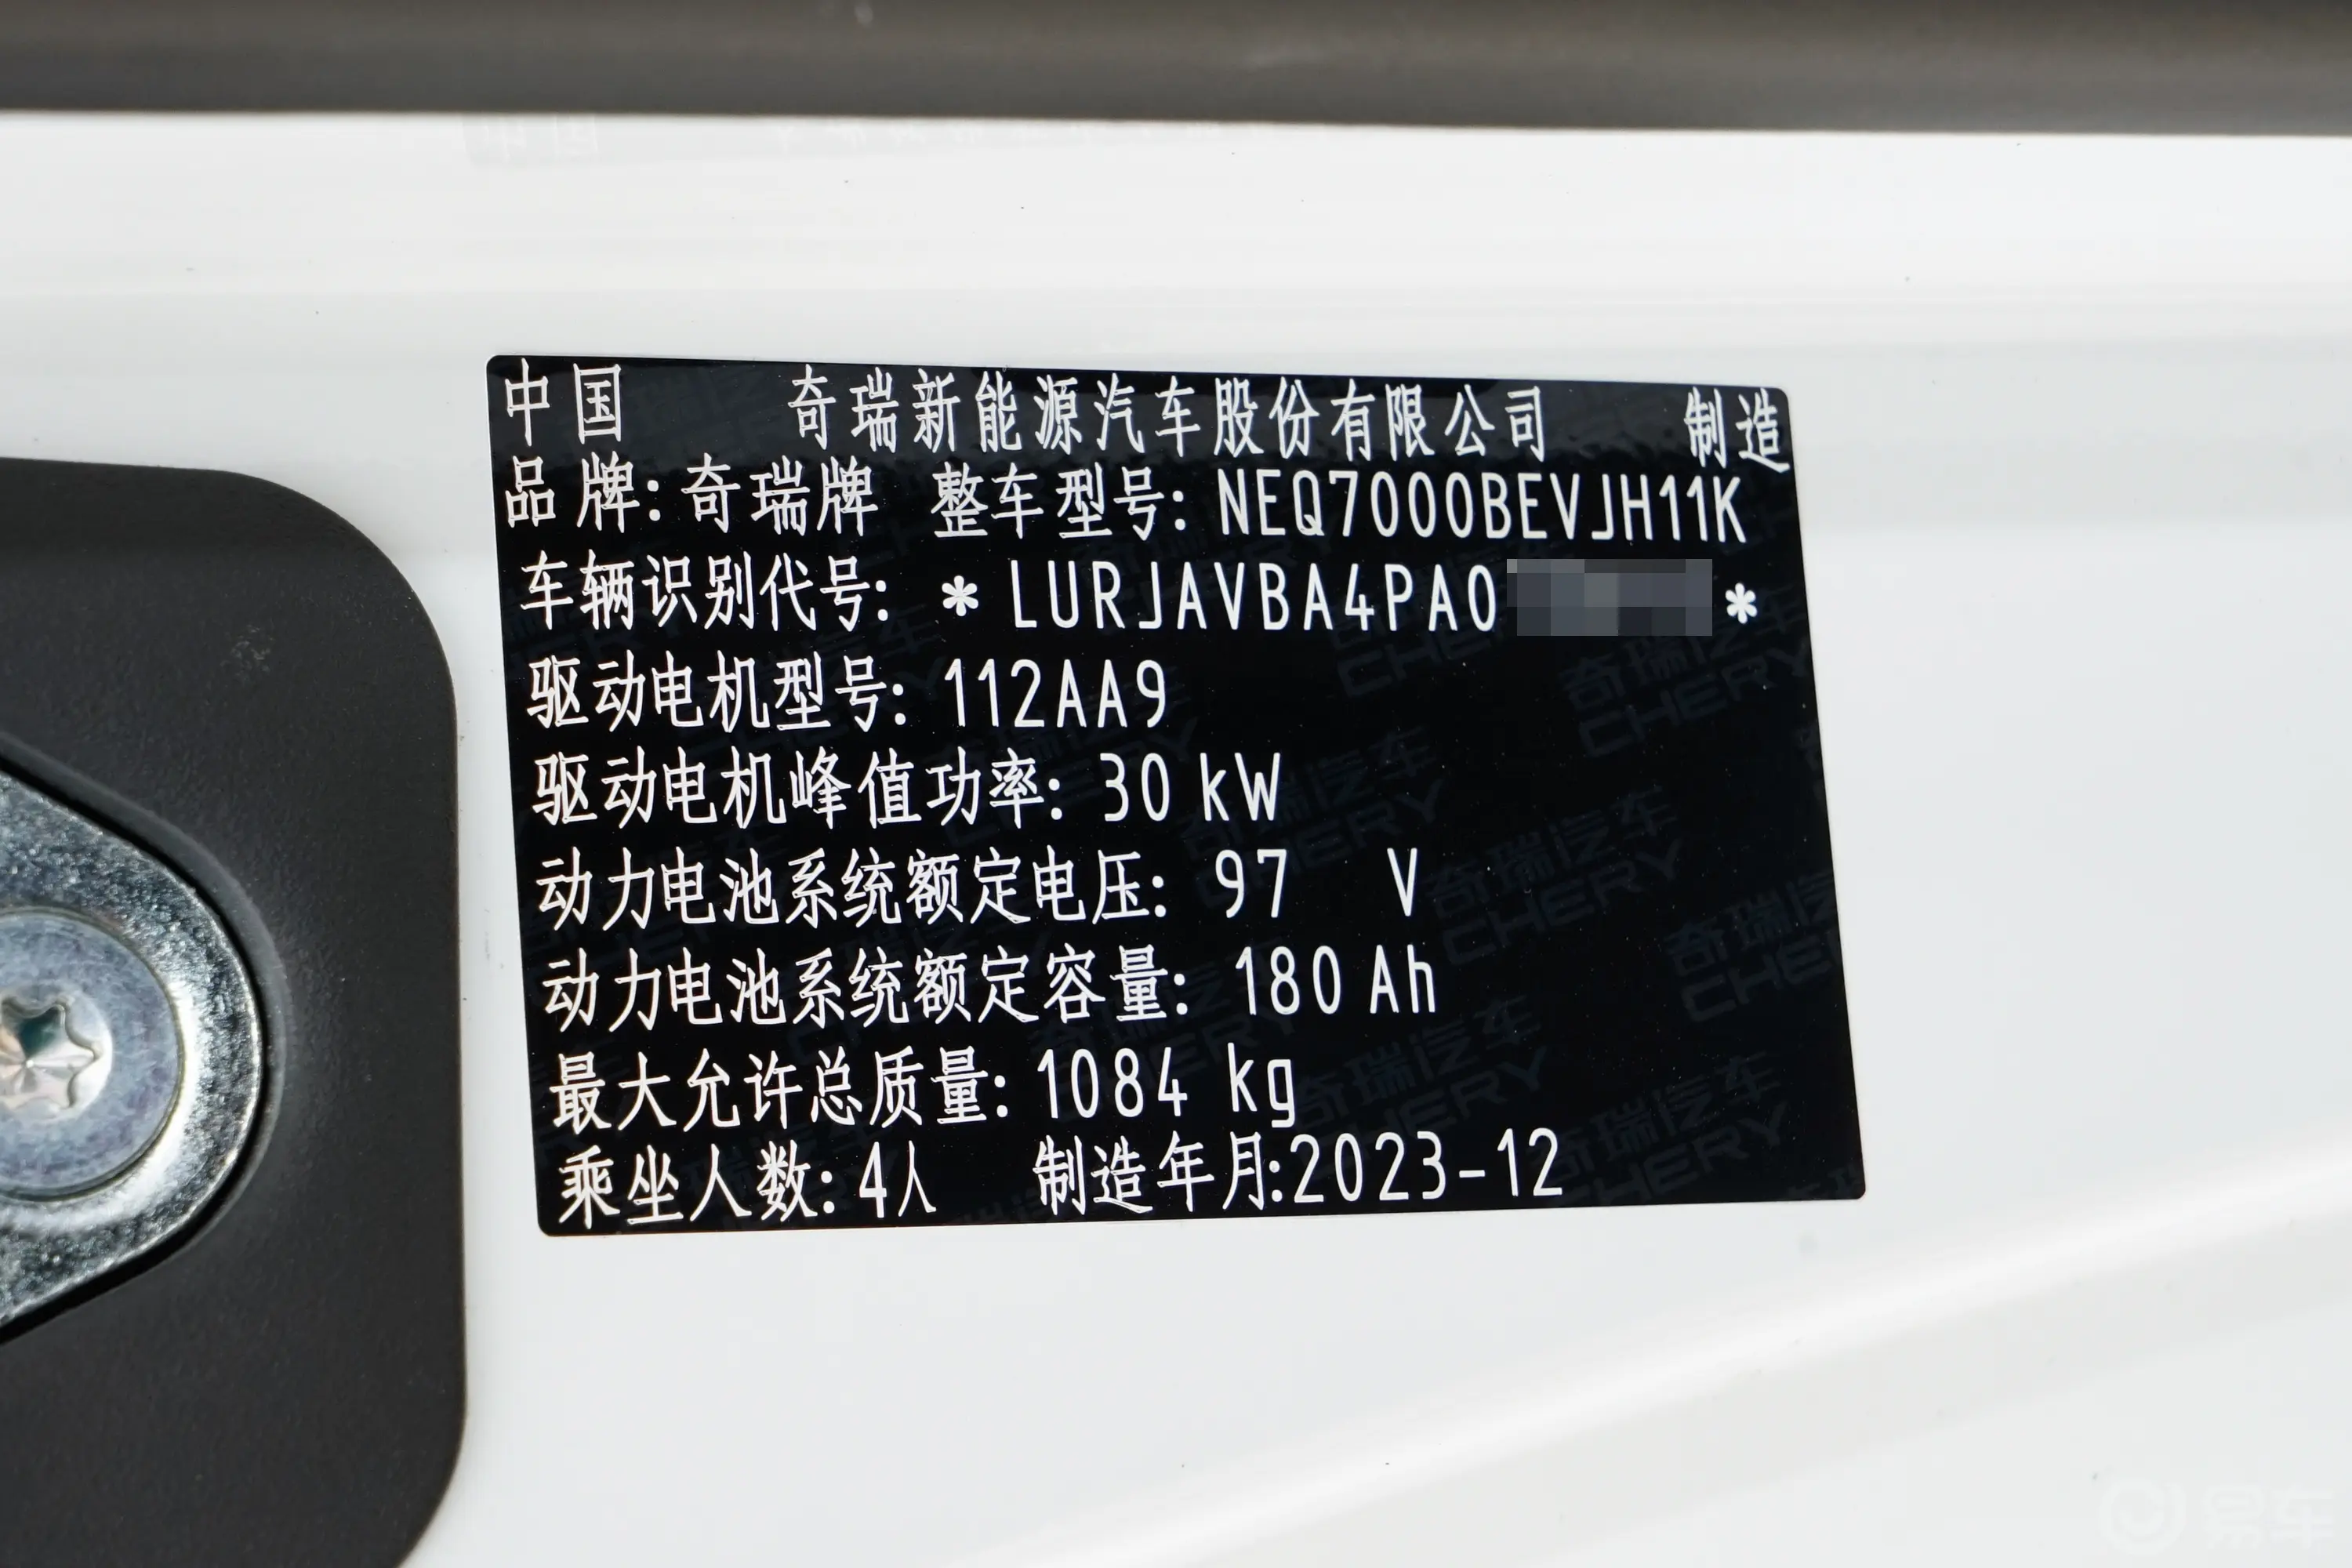 QQ冰淇淋205km 圣代款车辆信息铭牌